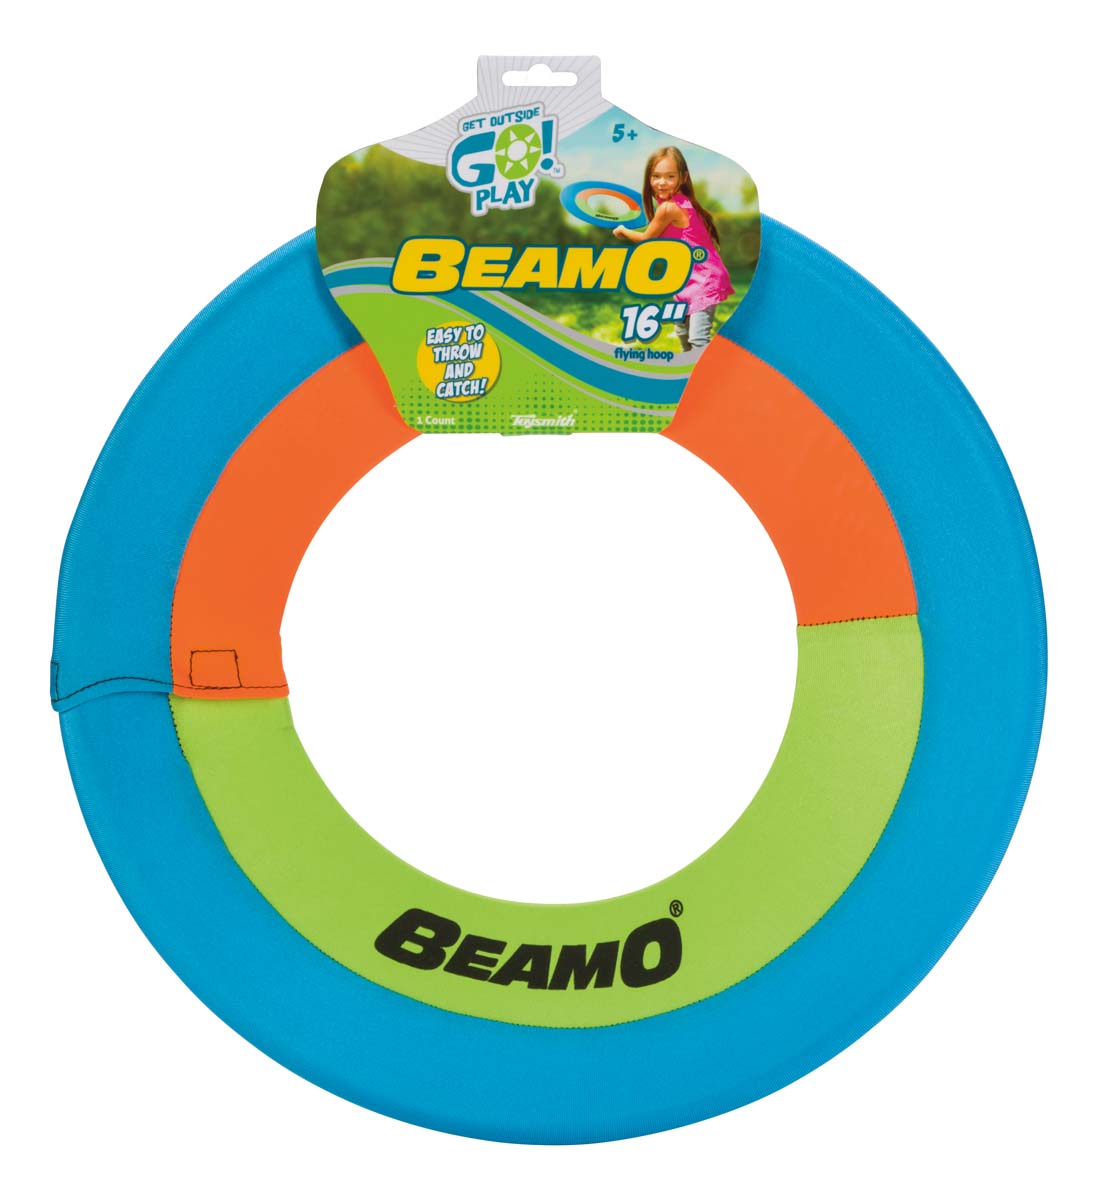 GO! Play Beamo 16" Flying Disc